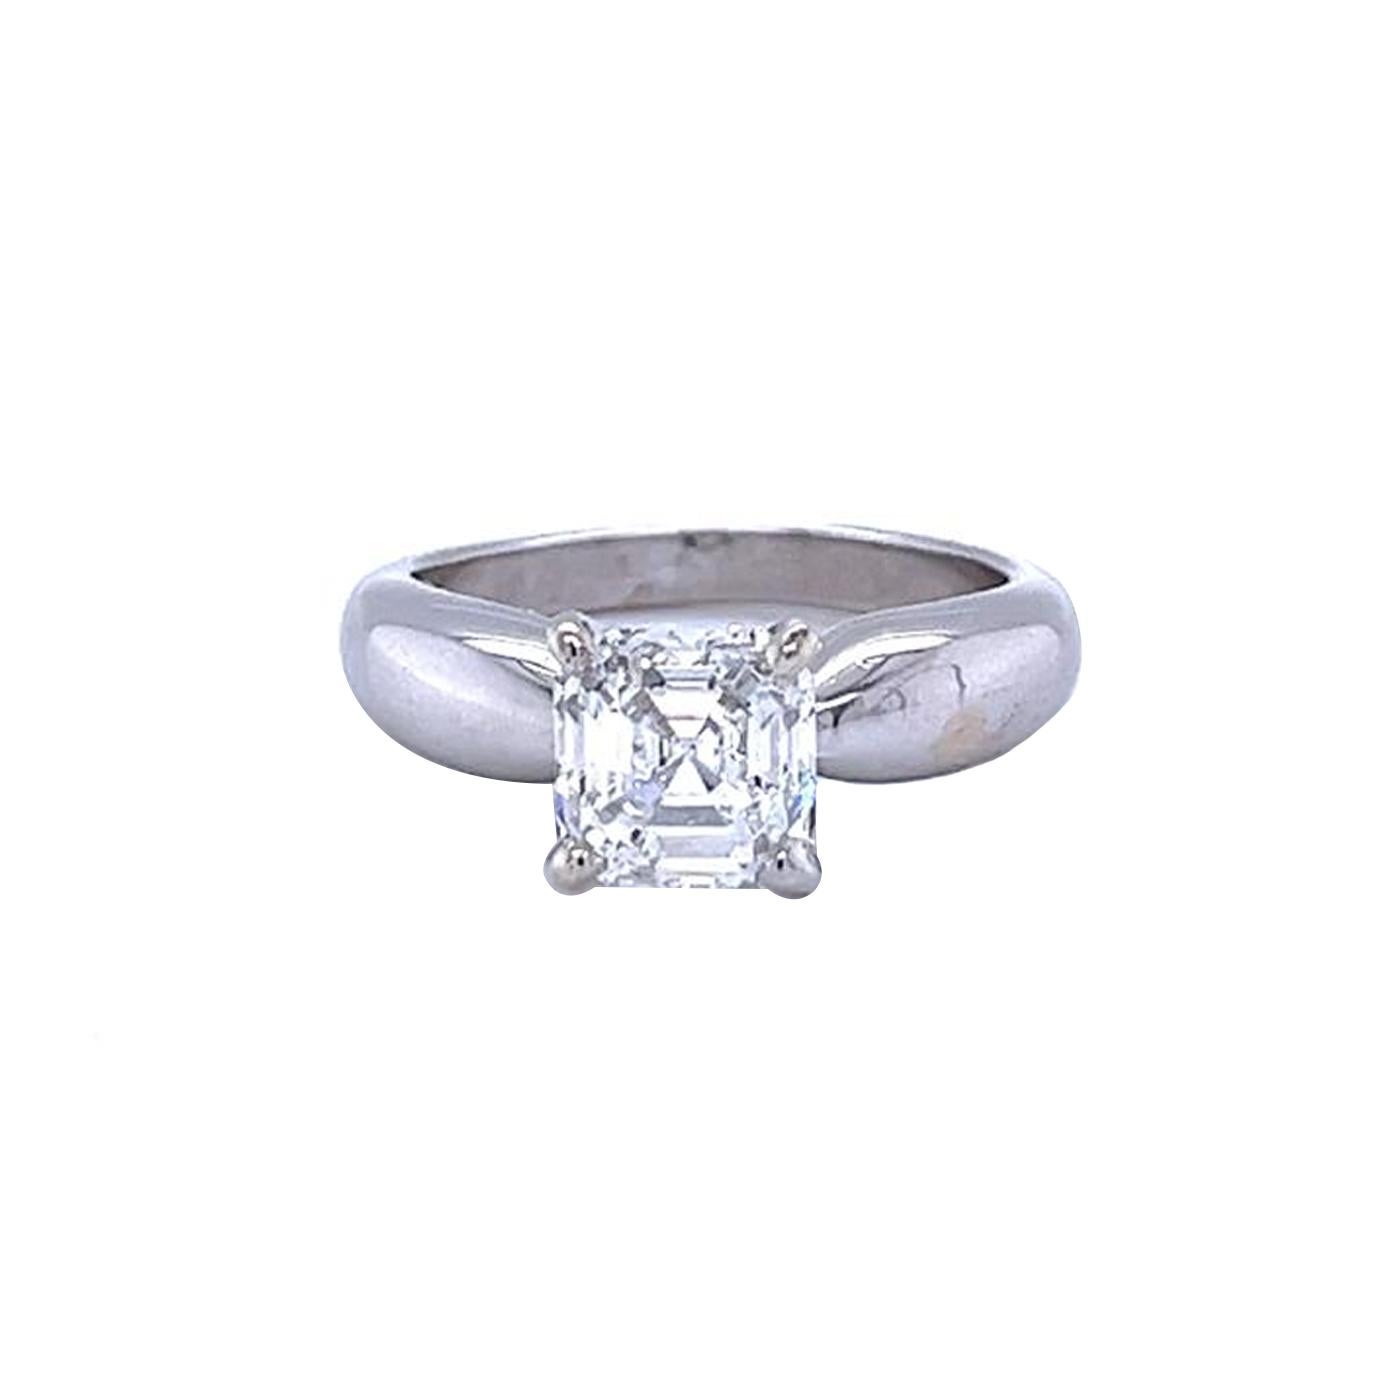 Flawless GIA Certified 2.01 Carat Asscher Cut Diamond Ring 18 Karat White Gold For Sale 1